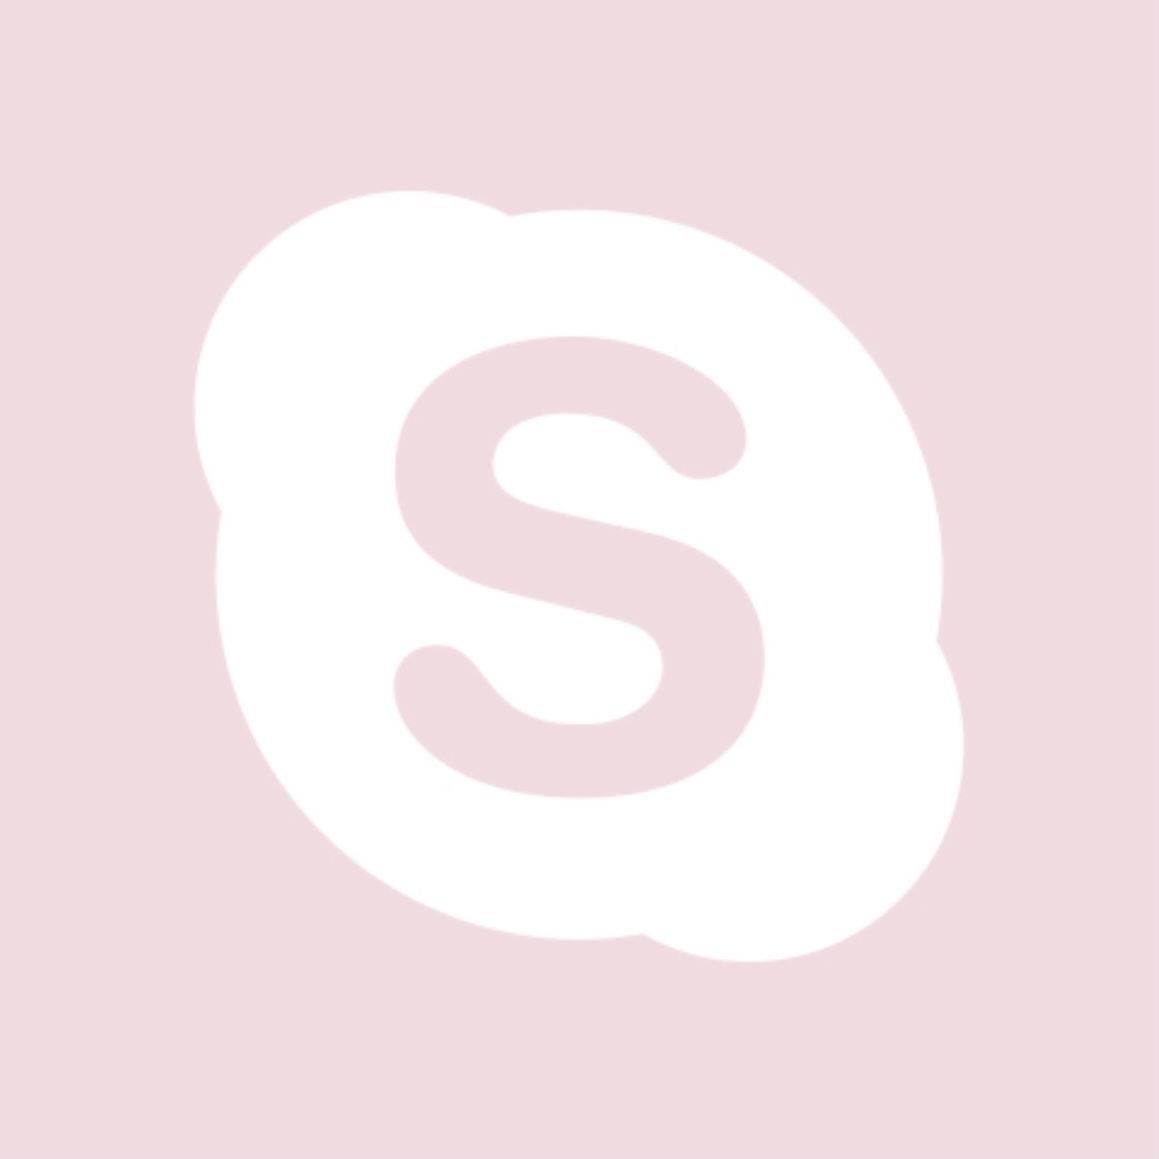  Skype Hintergrundbild 1159x1159. Skype icon. Pastel pink icons:), Adobe photohop design, iPhone icon